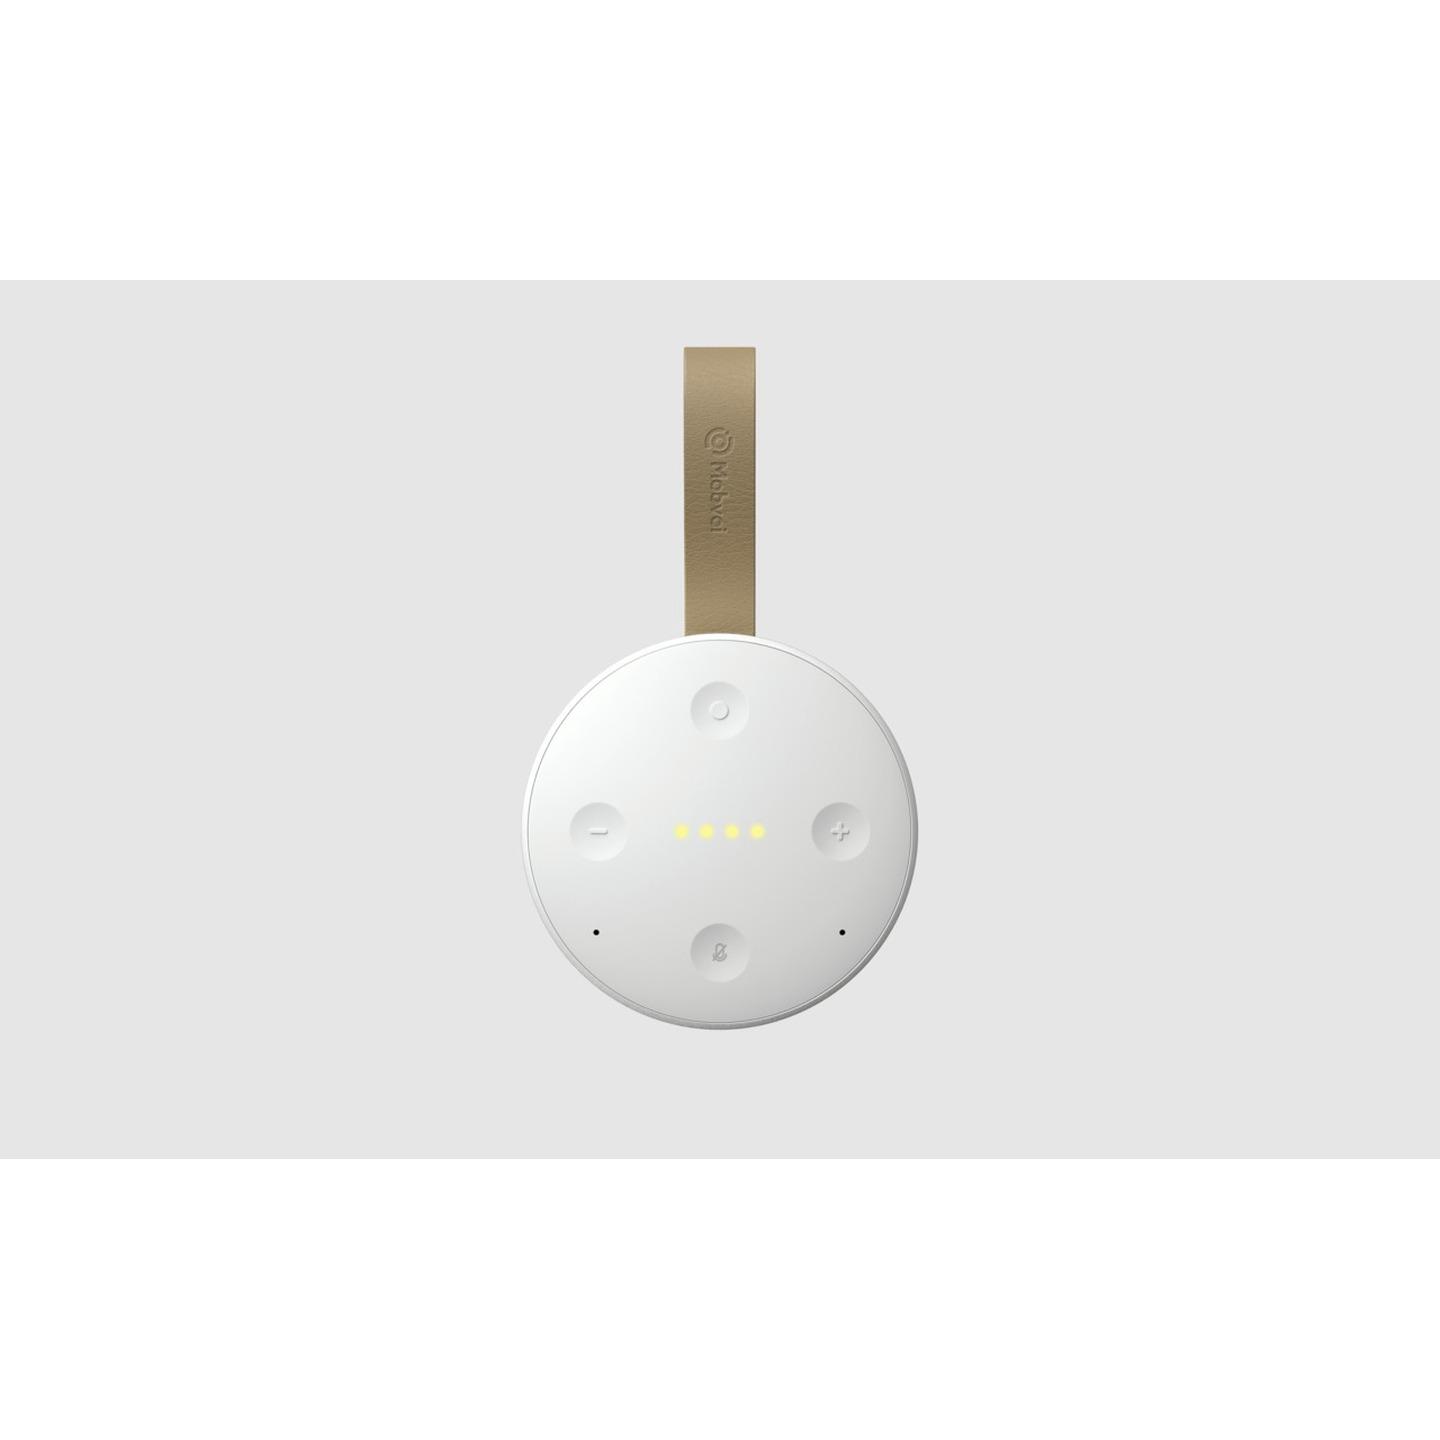 TicHome Mini Smart Speaker White with Google Assistant